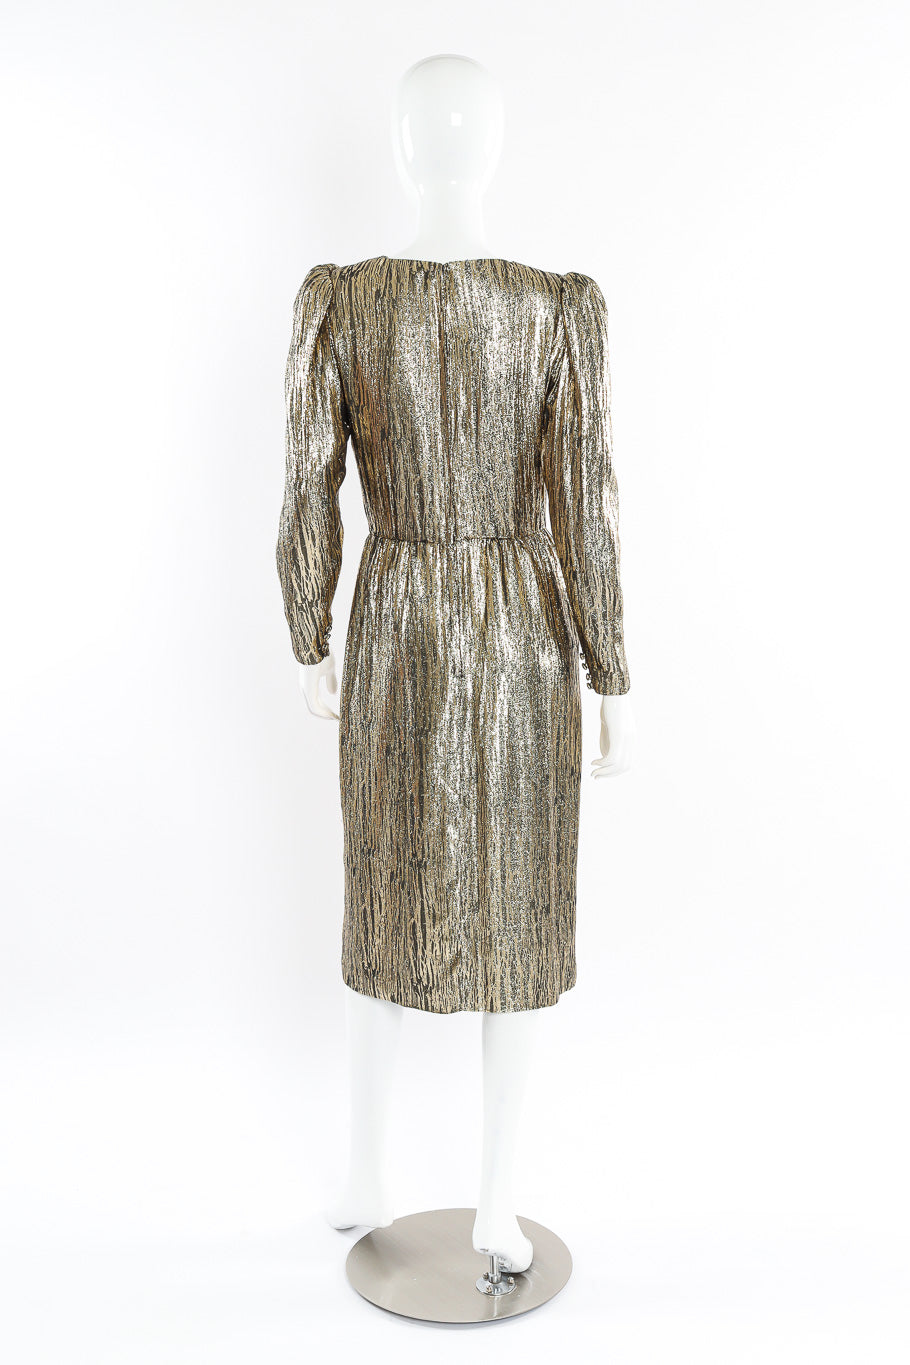 Metallic dress by Nolan Miller mannequin back @recessla